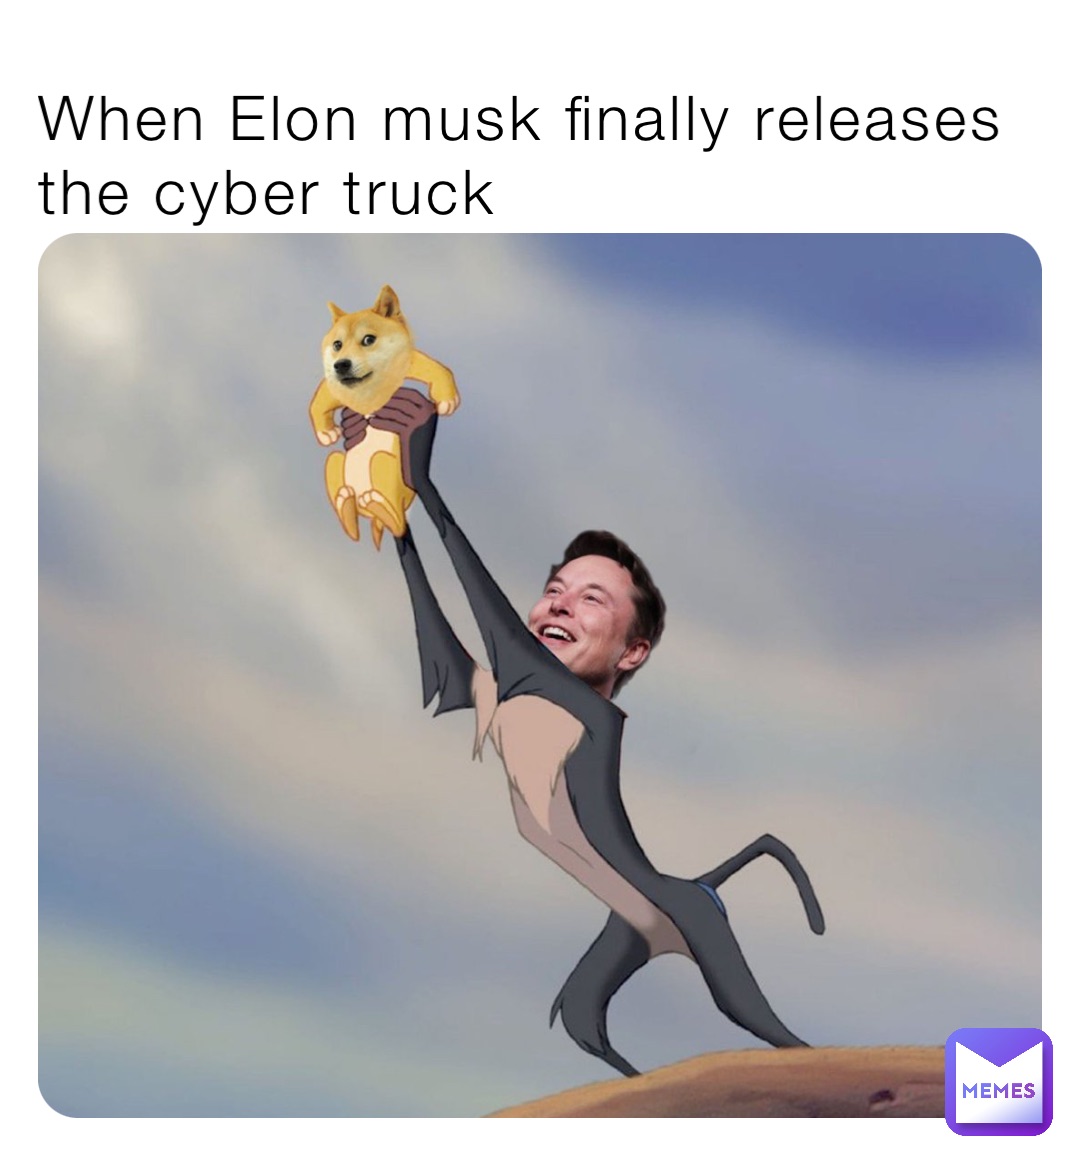 When Elon musk finally releases the cyber truck